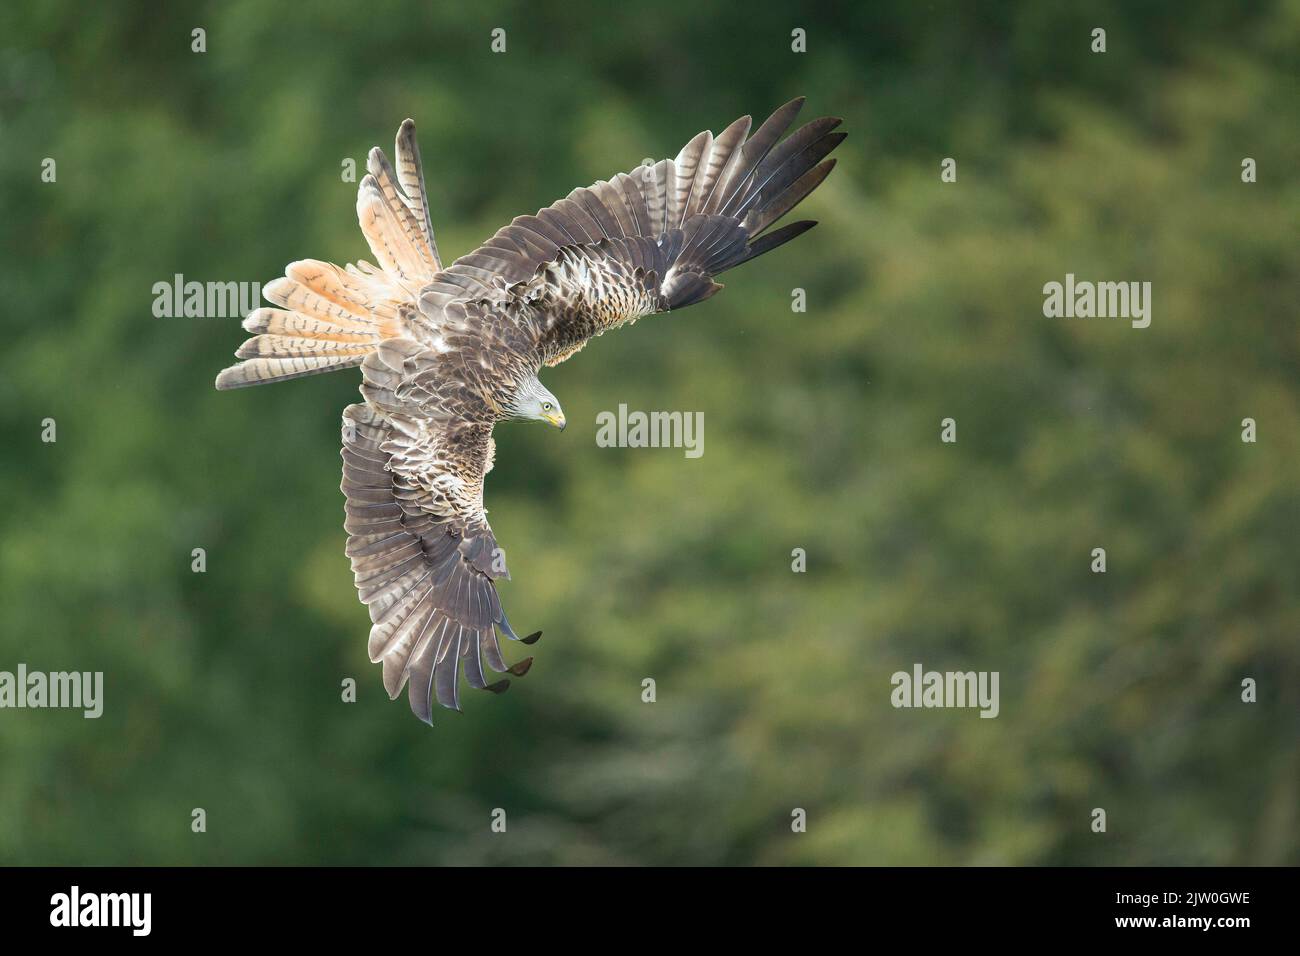 Milano real (Milvus milvus) en vuelo, Gigrin granja, Rhayader, Powys, Gales Foto de stock